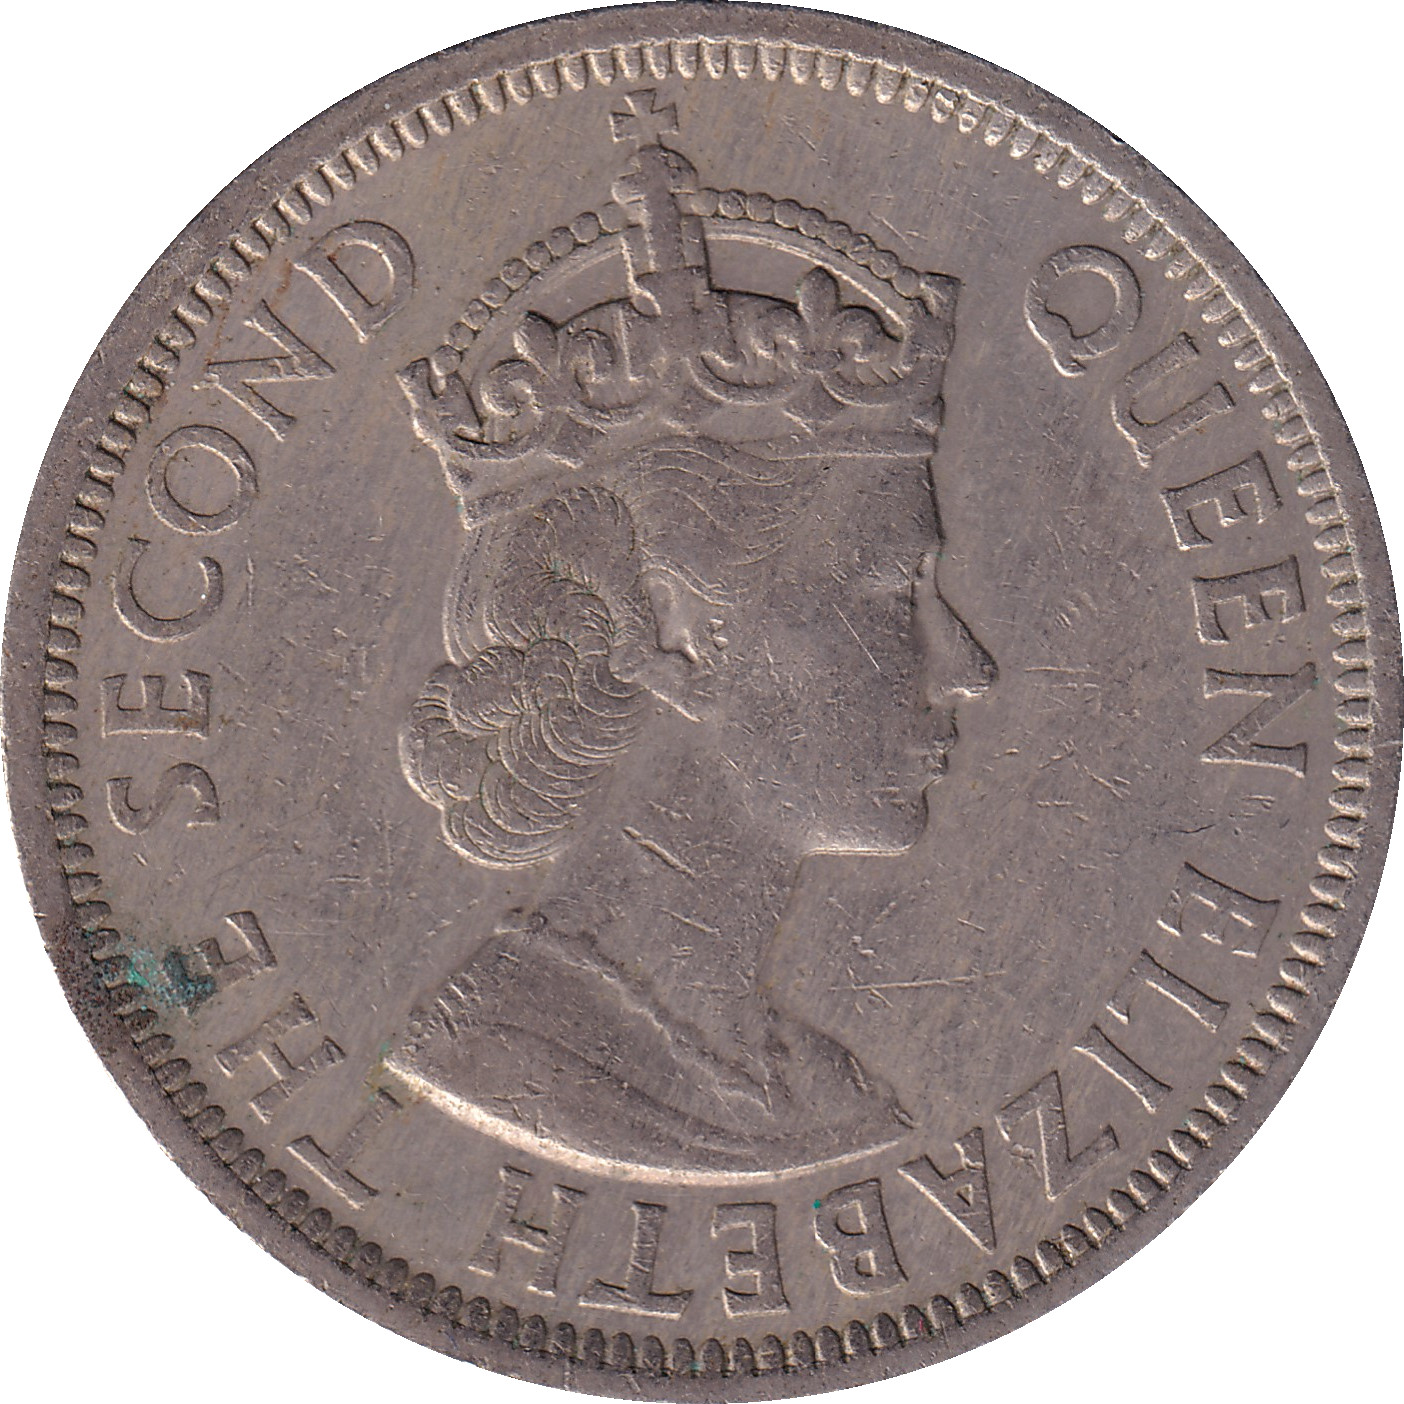 50 cents - Elizabeth II